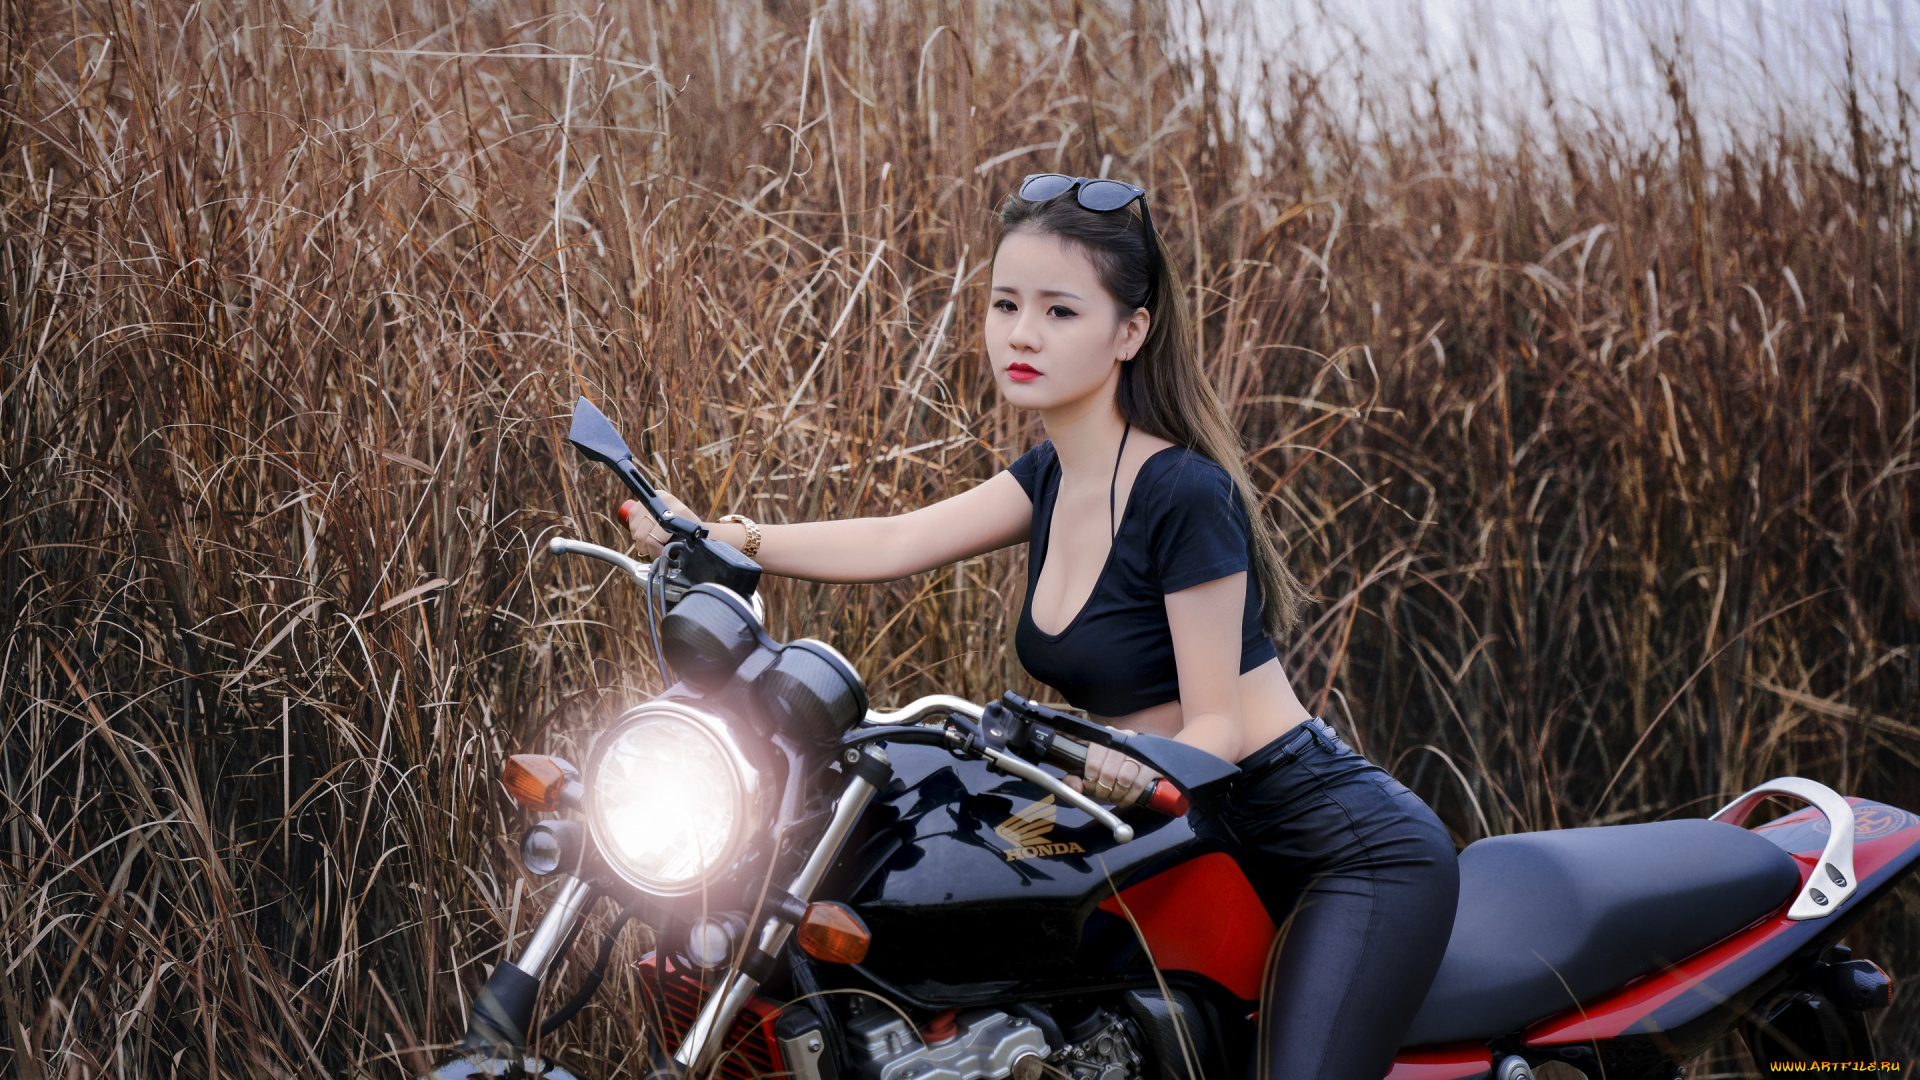 мотоциклы, мото, с, девушкой, мотоцикл, стиль, азиатка, байк, девушка